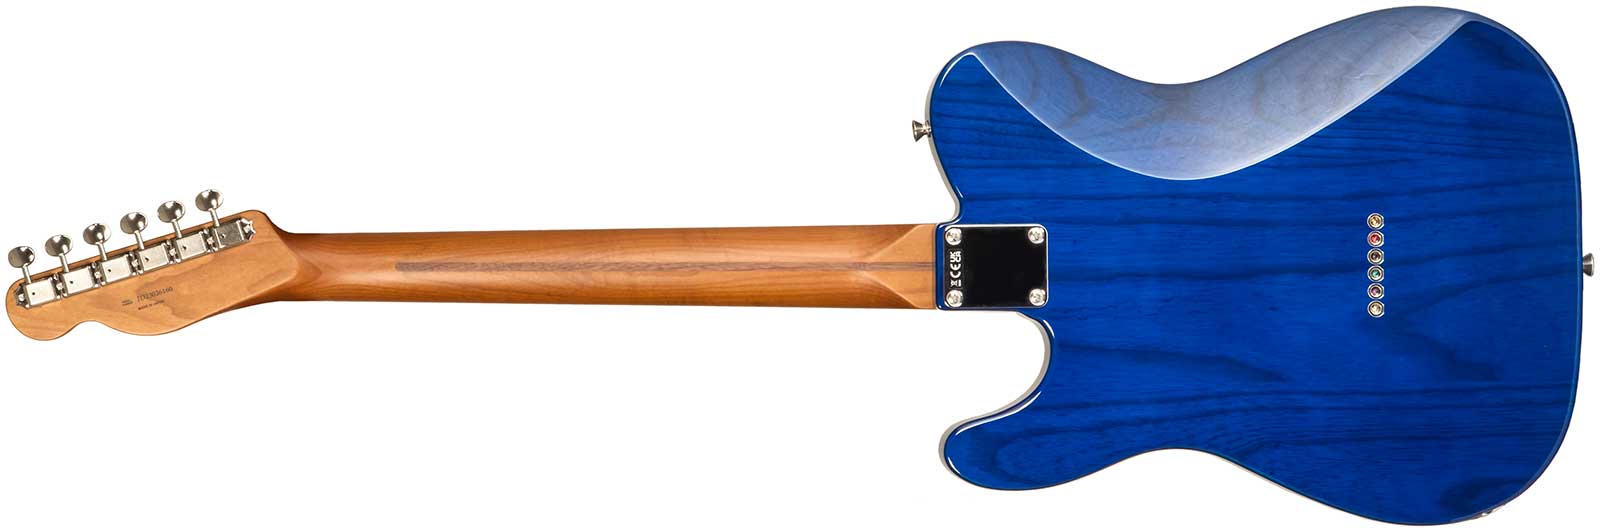 Fender Tele Hybrid Ii Jap 2s Ht Mn - Aqua Blue - E-Gitarre in Teleform - Variation 1